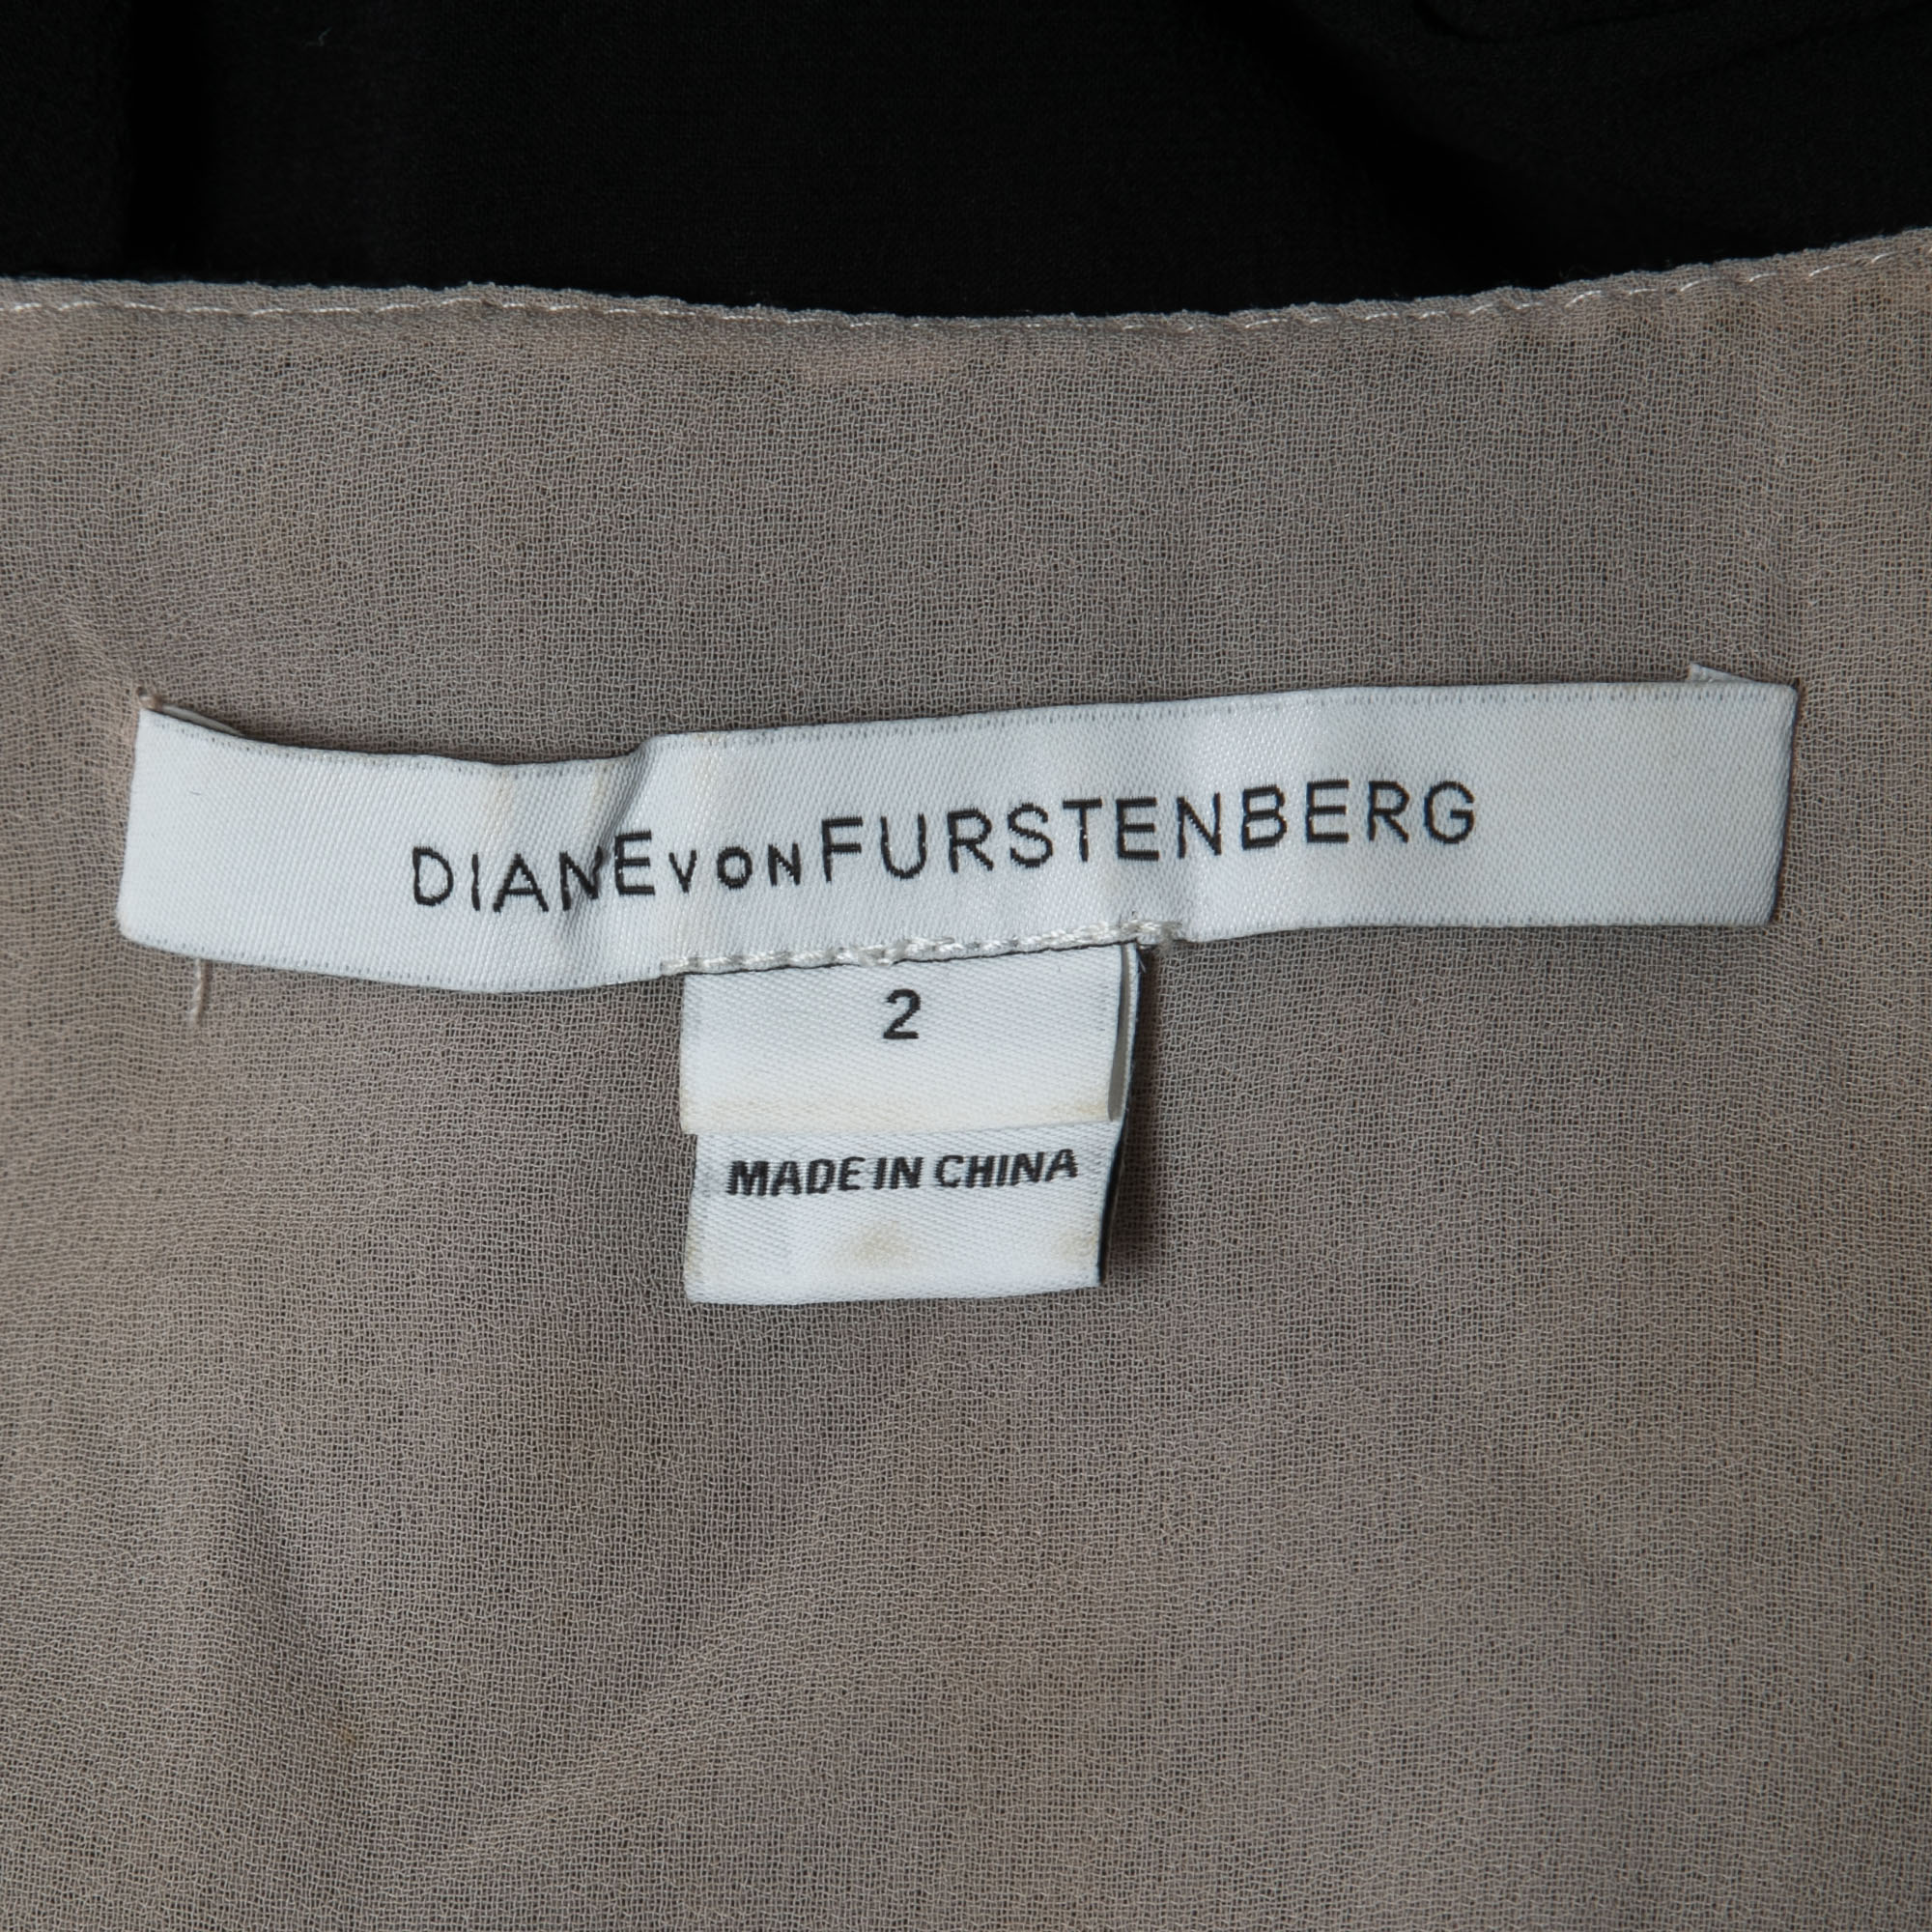 Diane Von Furstenberg Black/White Lace & Silk Sleeveless Mini Dress S